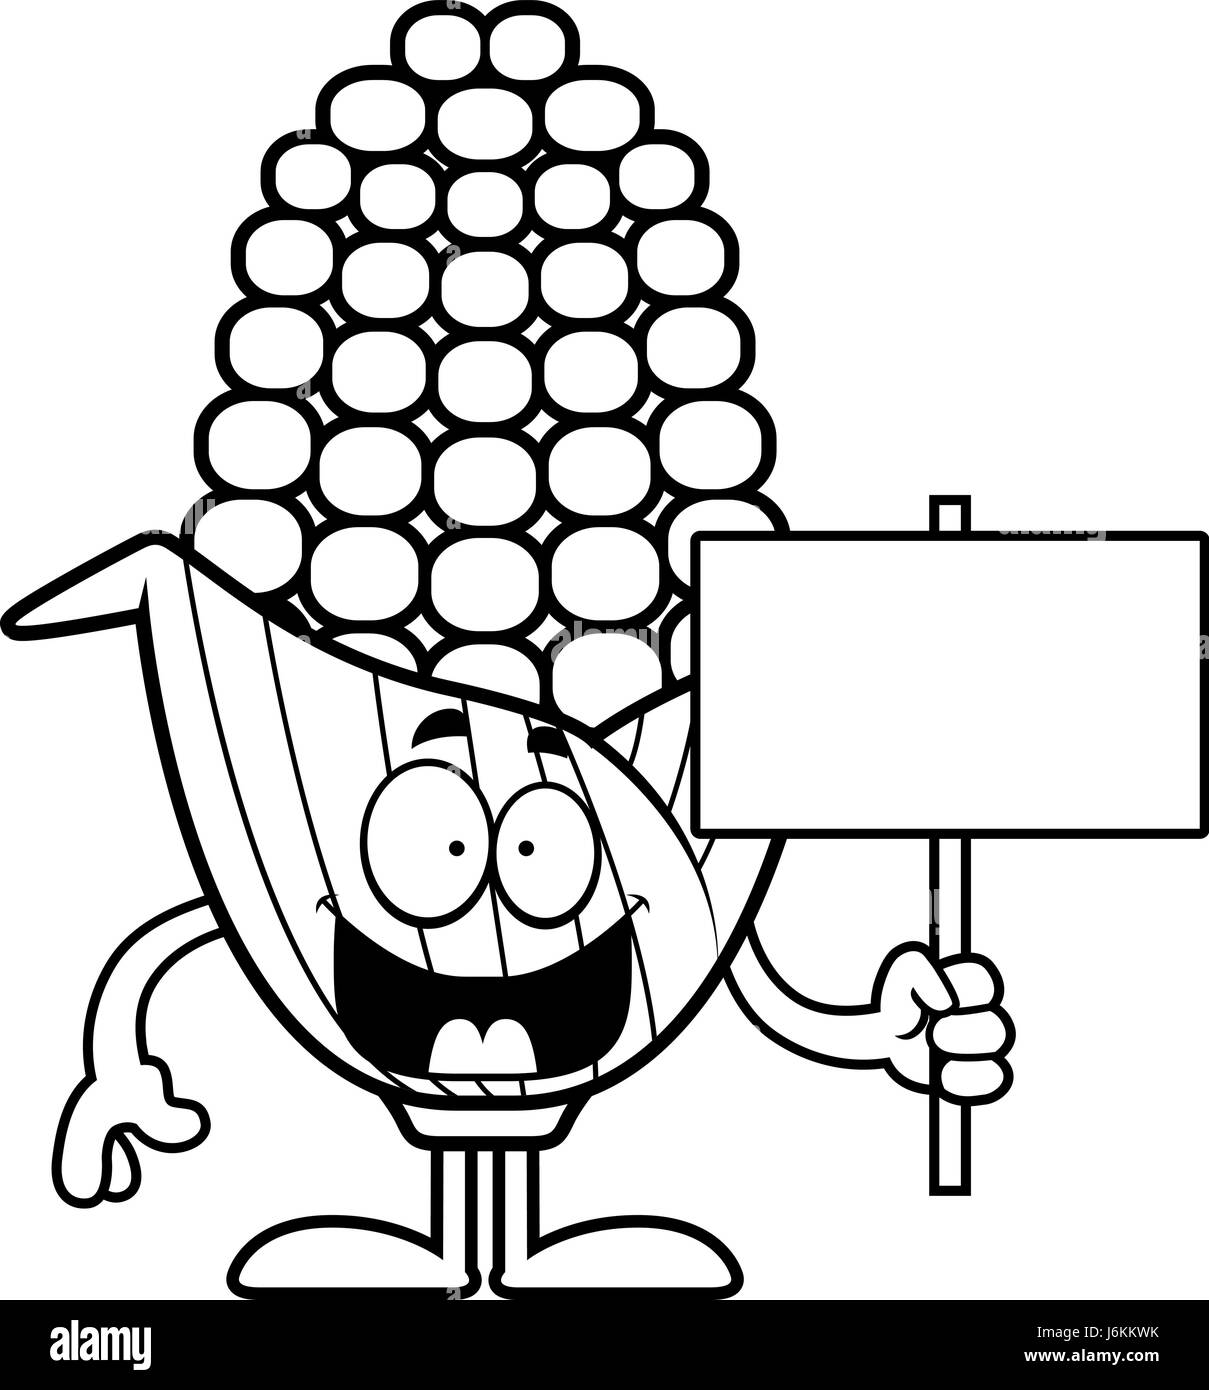 Corn cob cartoon Black and White Stock Photos & Images - Alamy